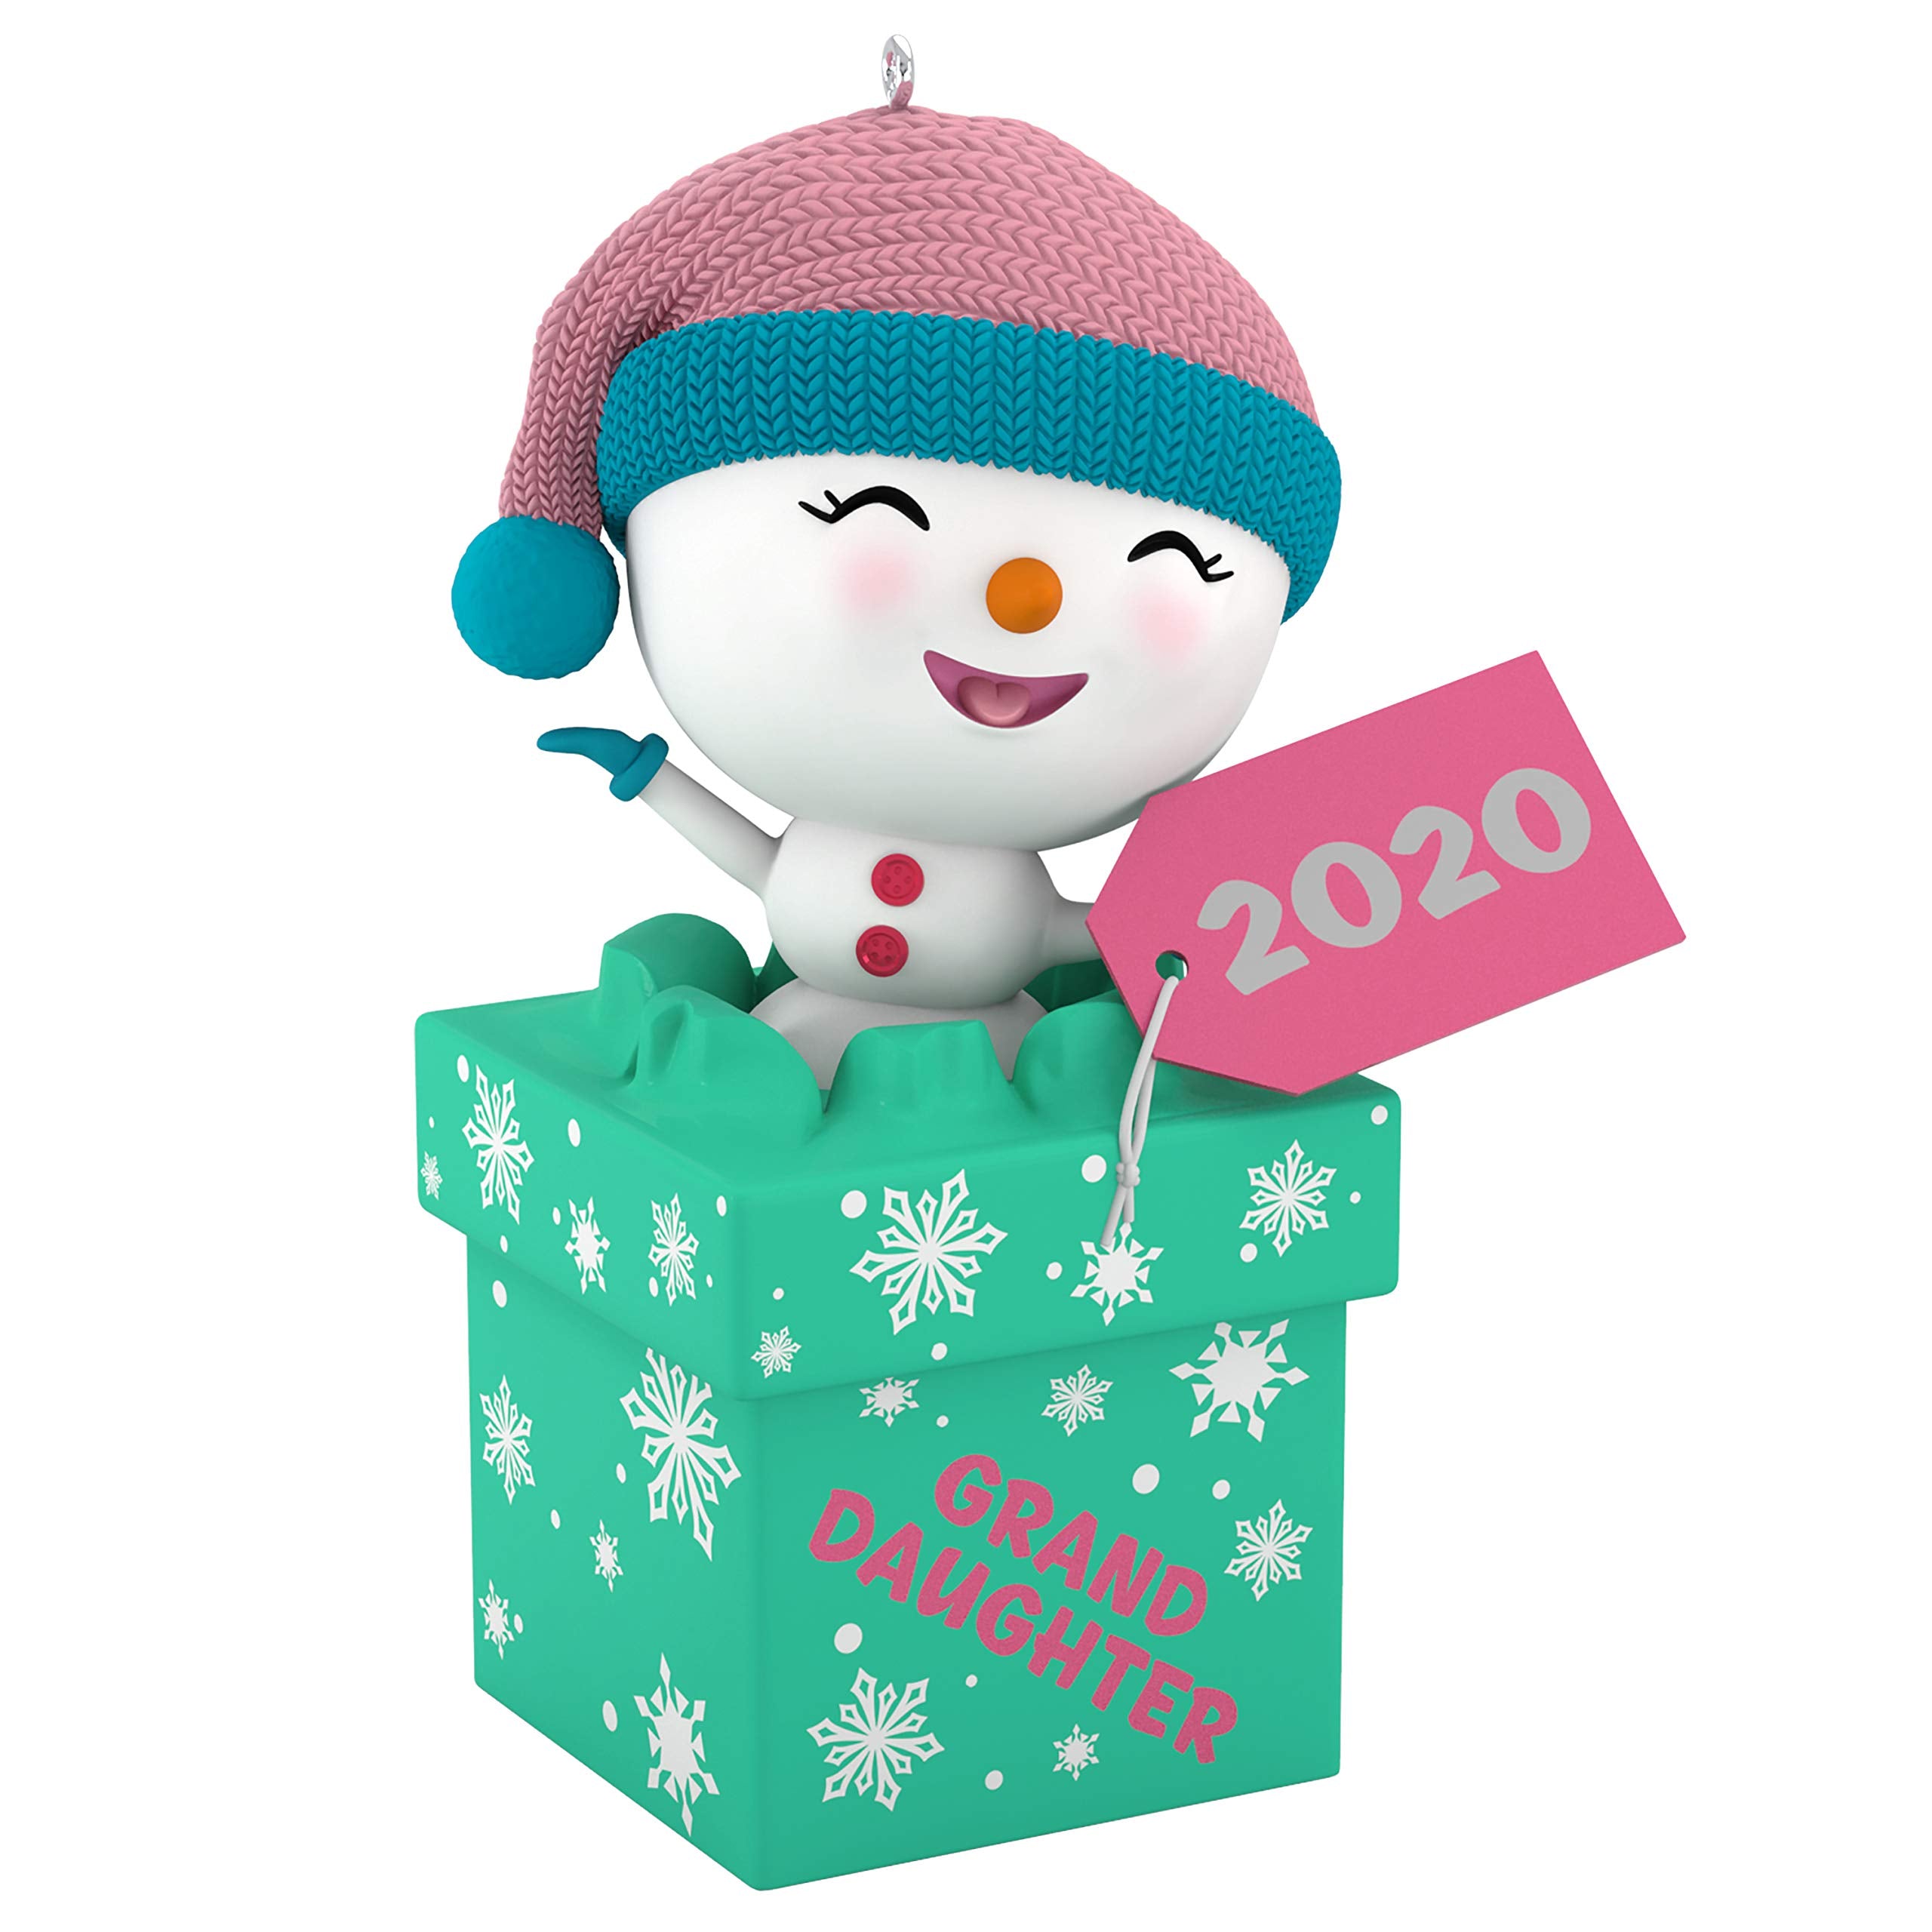 Hallmark Keepsake Christmas Ornament 2020 Year-Dated, The Gift of Granddaughters Snowman (1399QGO1704)